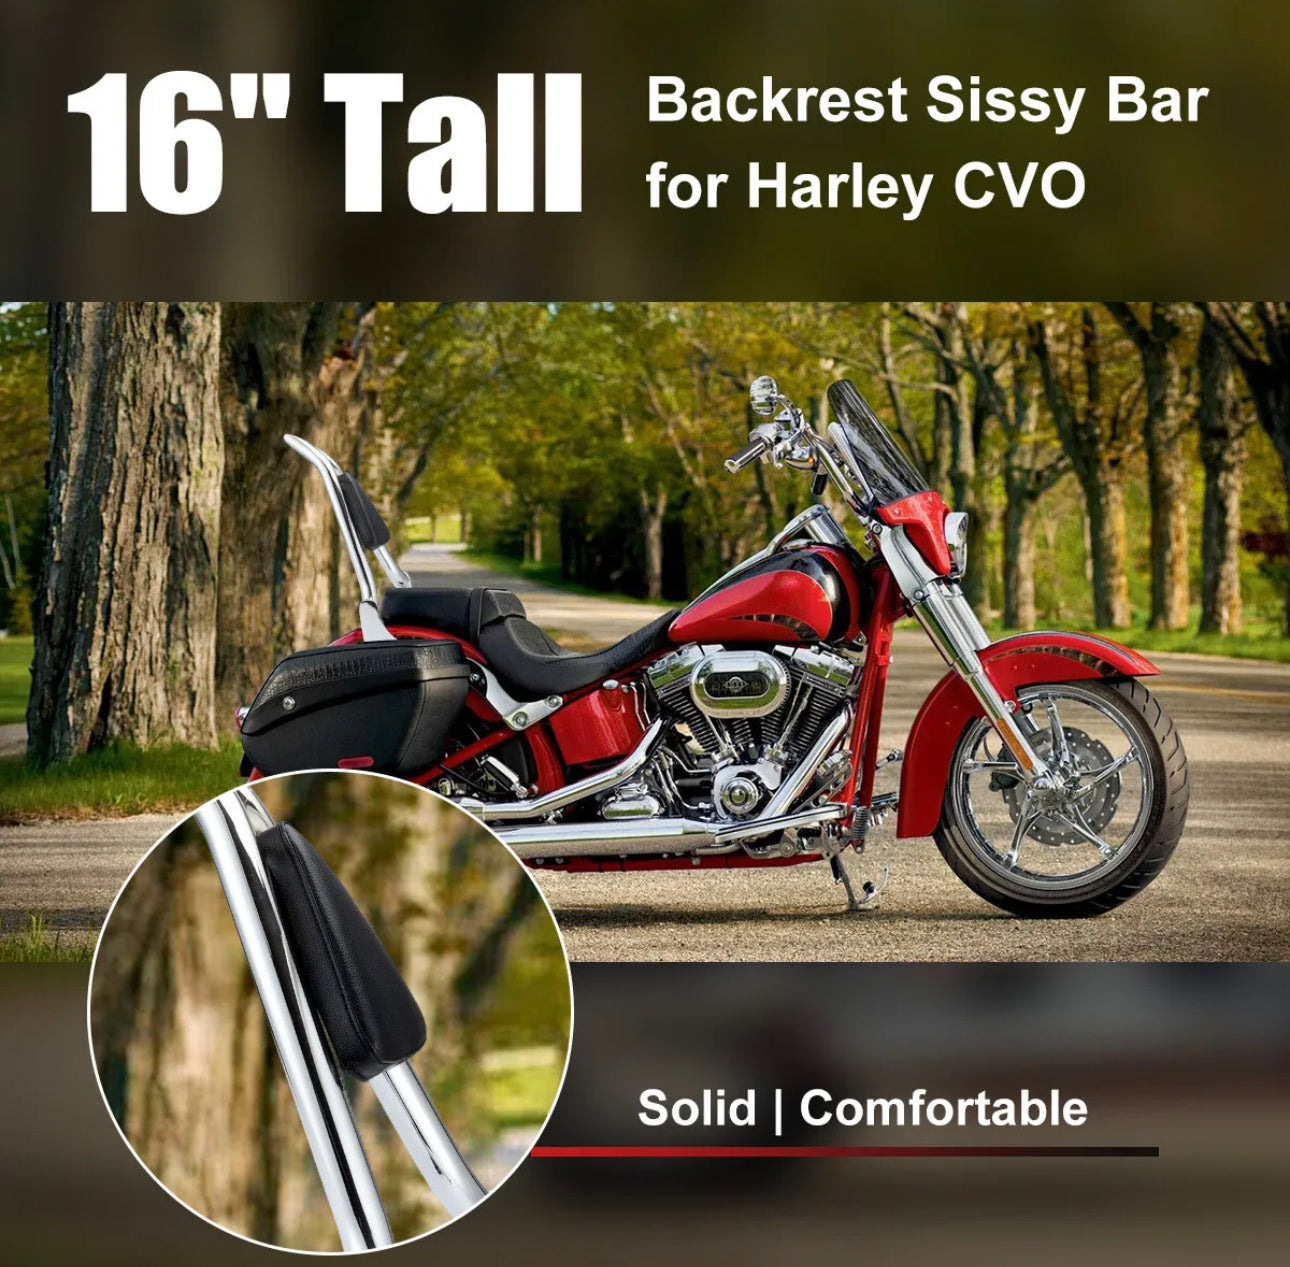 16" Tall Backrest Sissy Bar For Harley Road Glide Street Touring Road King 09-23